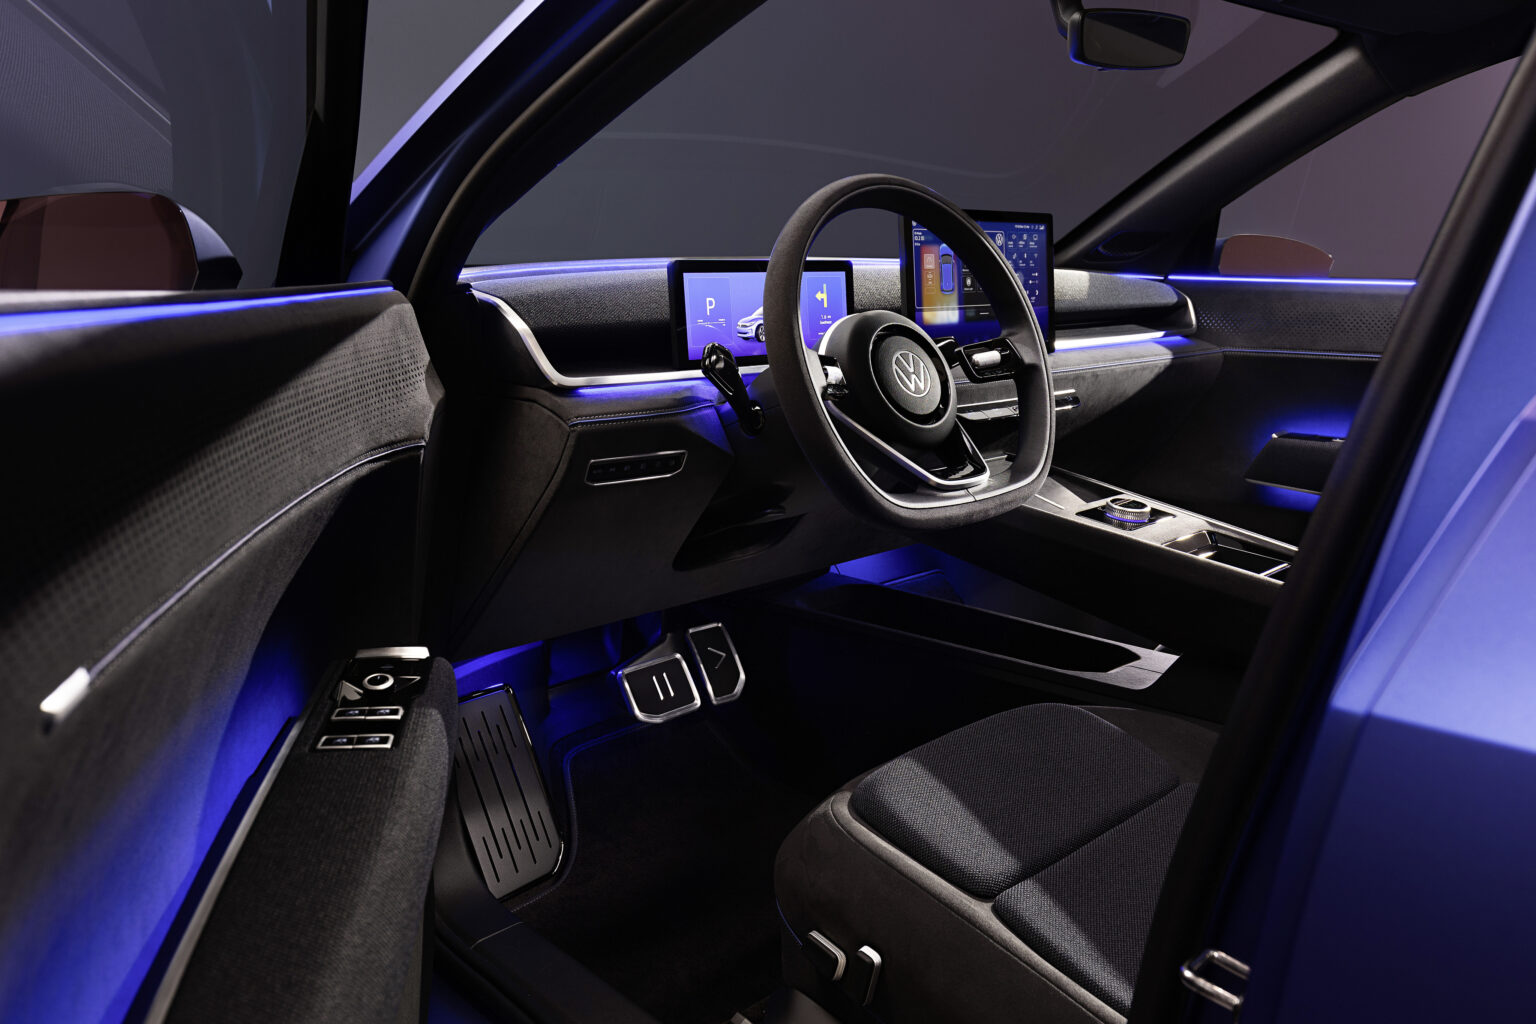 2025 Volkswagen ID.2all Interior Image 2